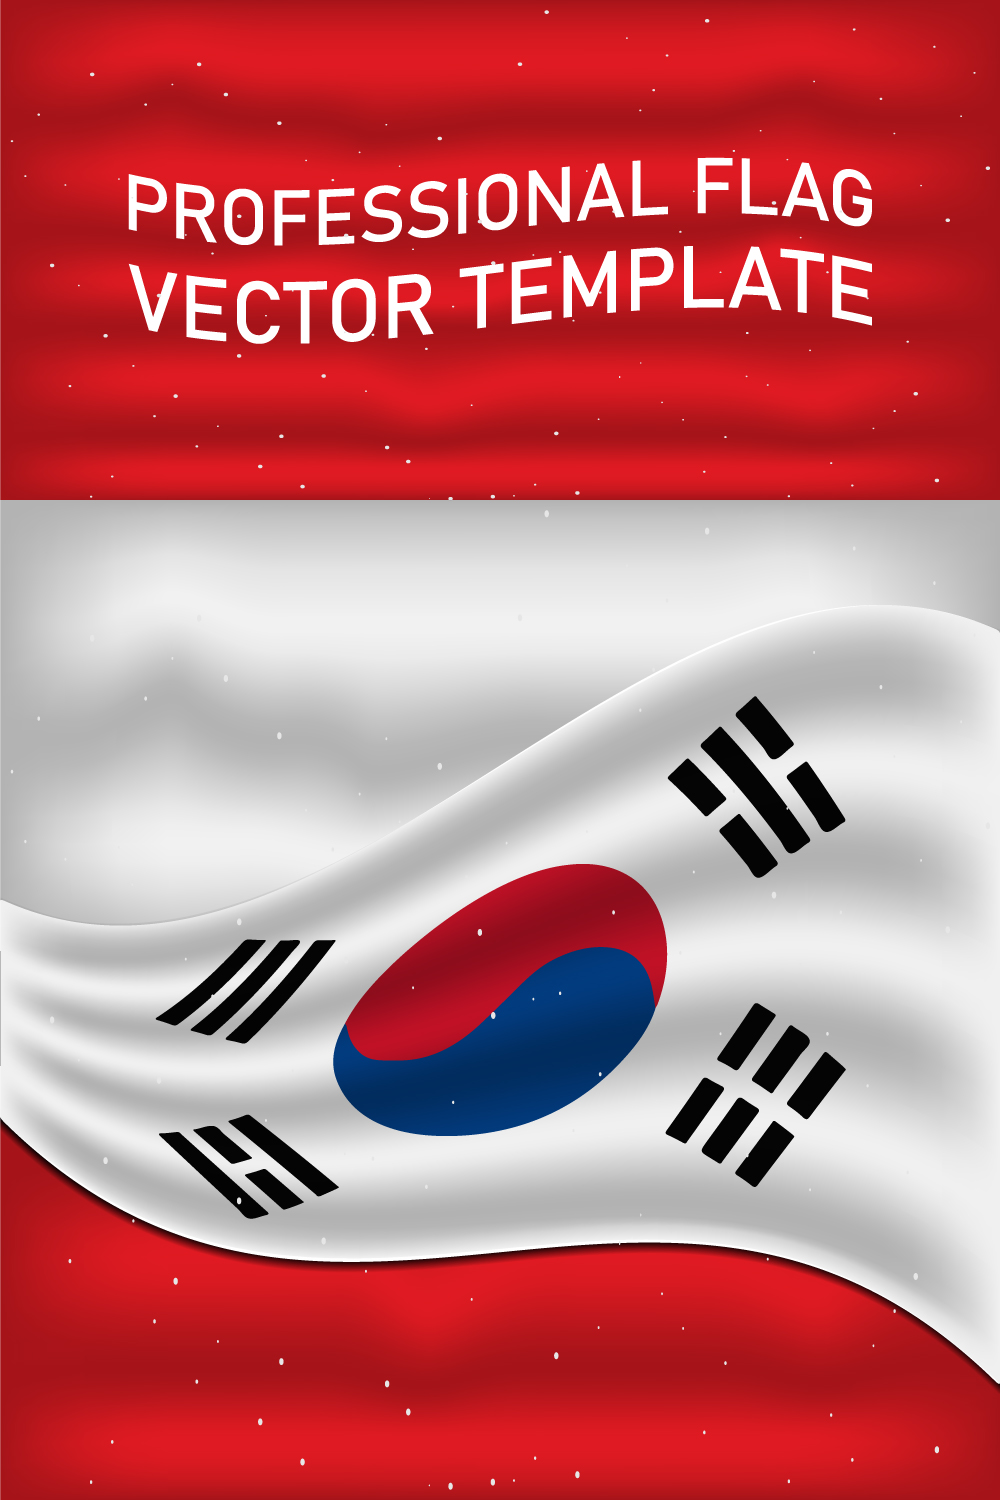 Unique image of the flag of South Korea.